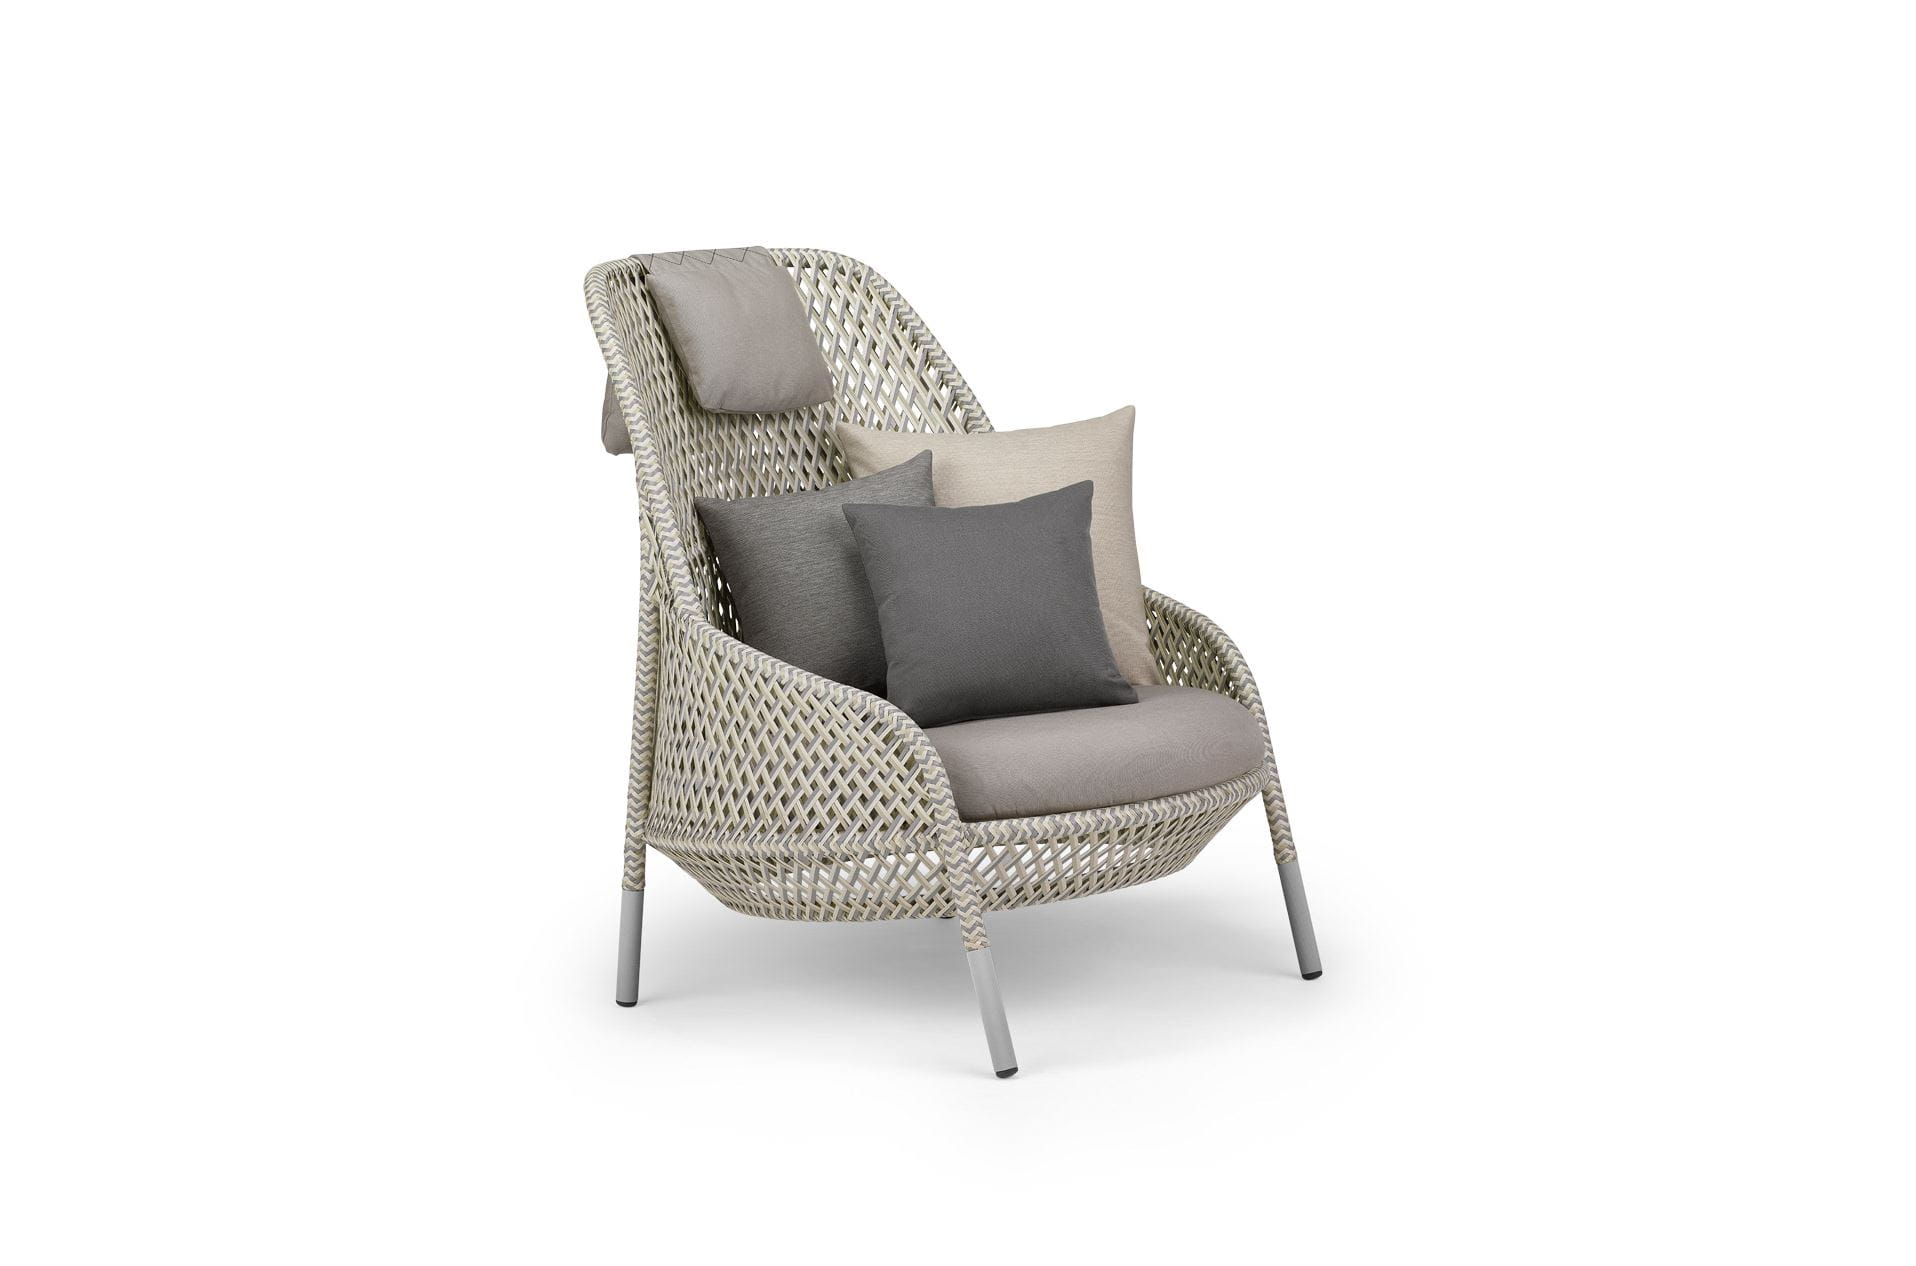 https://www.dedon.de/-/media/product-catalog/products/furnitures/ahnda/01-kollektionsbilder/white_quarz/DEDON-Ahnda-Wing-chair_cushions_white-quartz.jpg?rx=1&ry=0&rw=1916&rh=1266